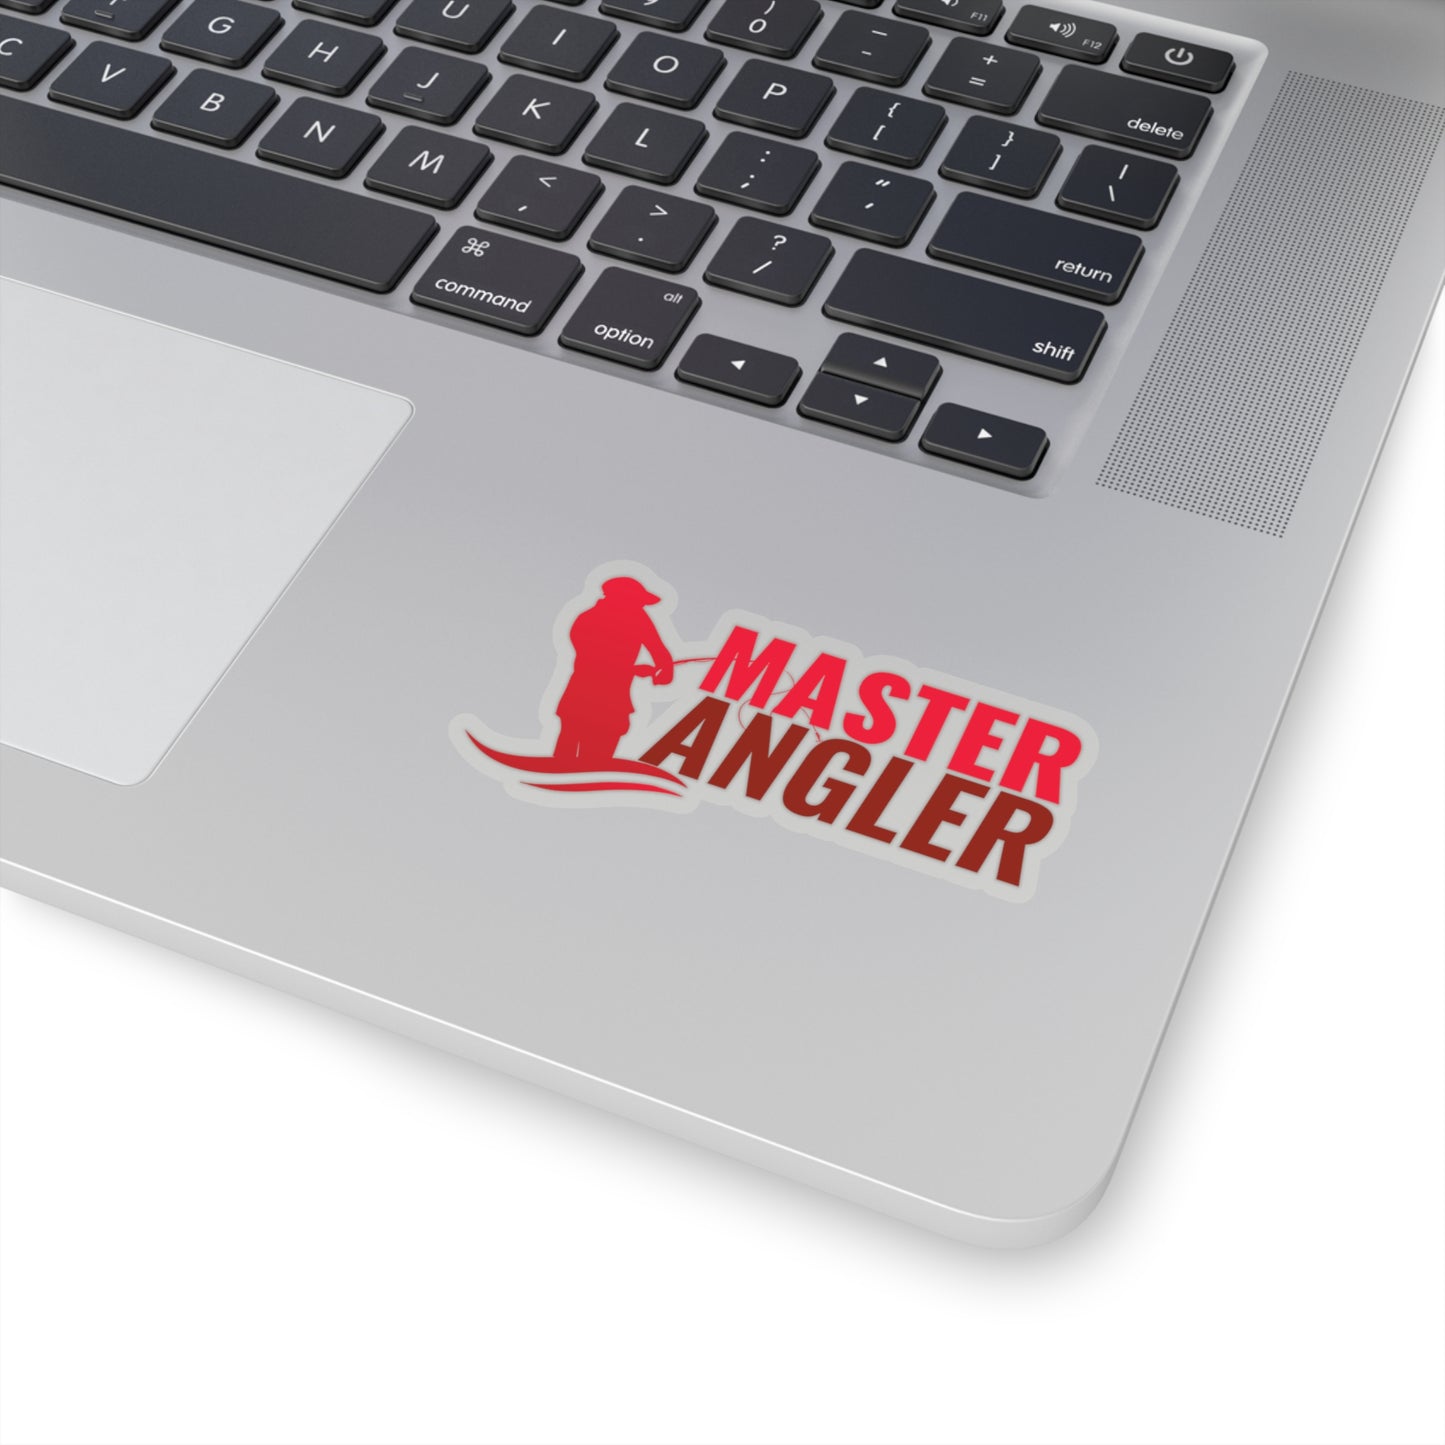 Master Angler Sticker - Red